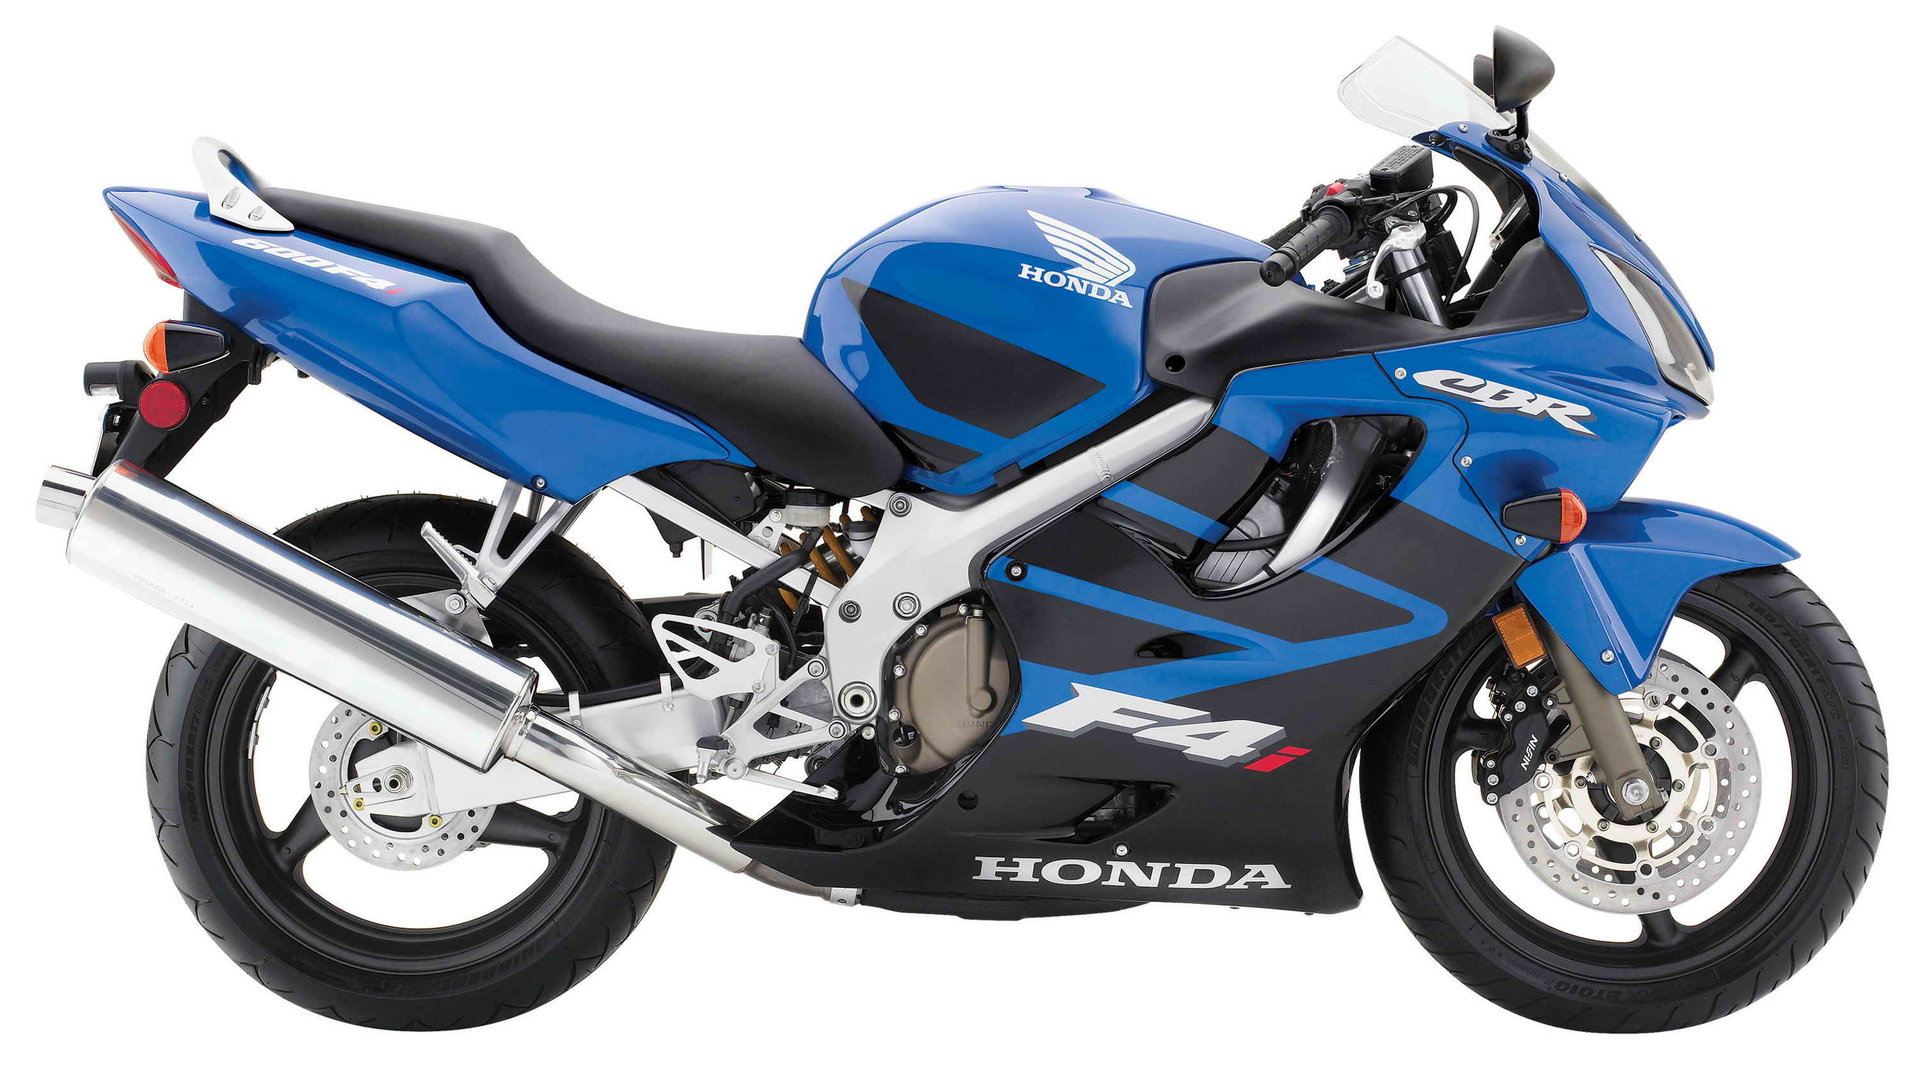 Deshabilitar línea techo Moto del día: Honda CBR 600 F4i - espíritu RACER moto